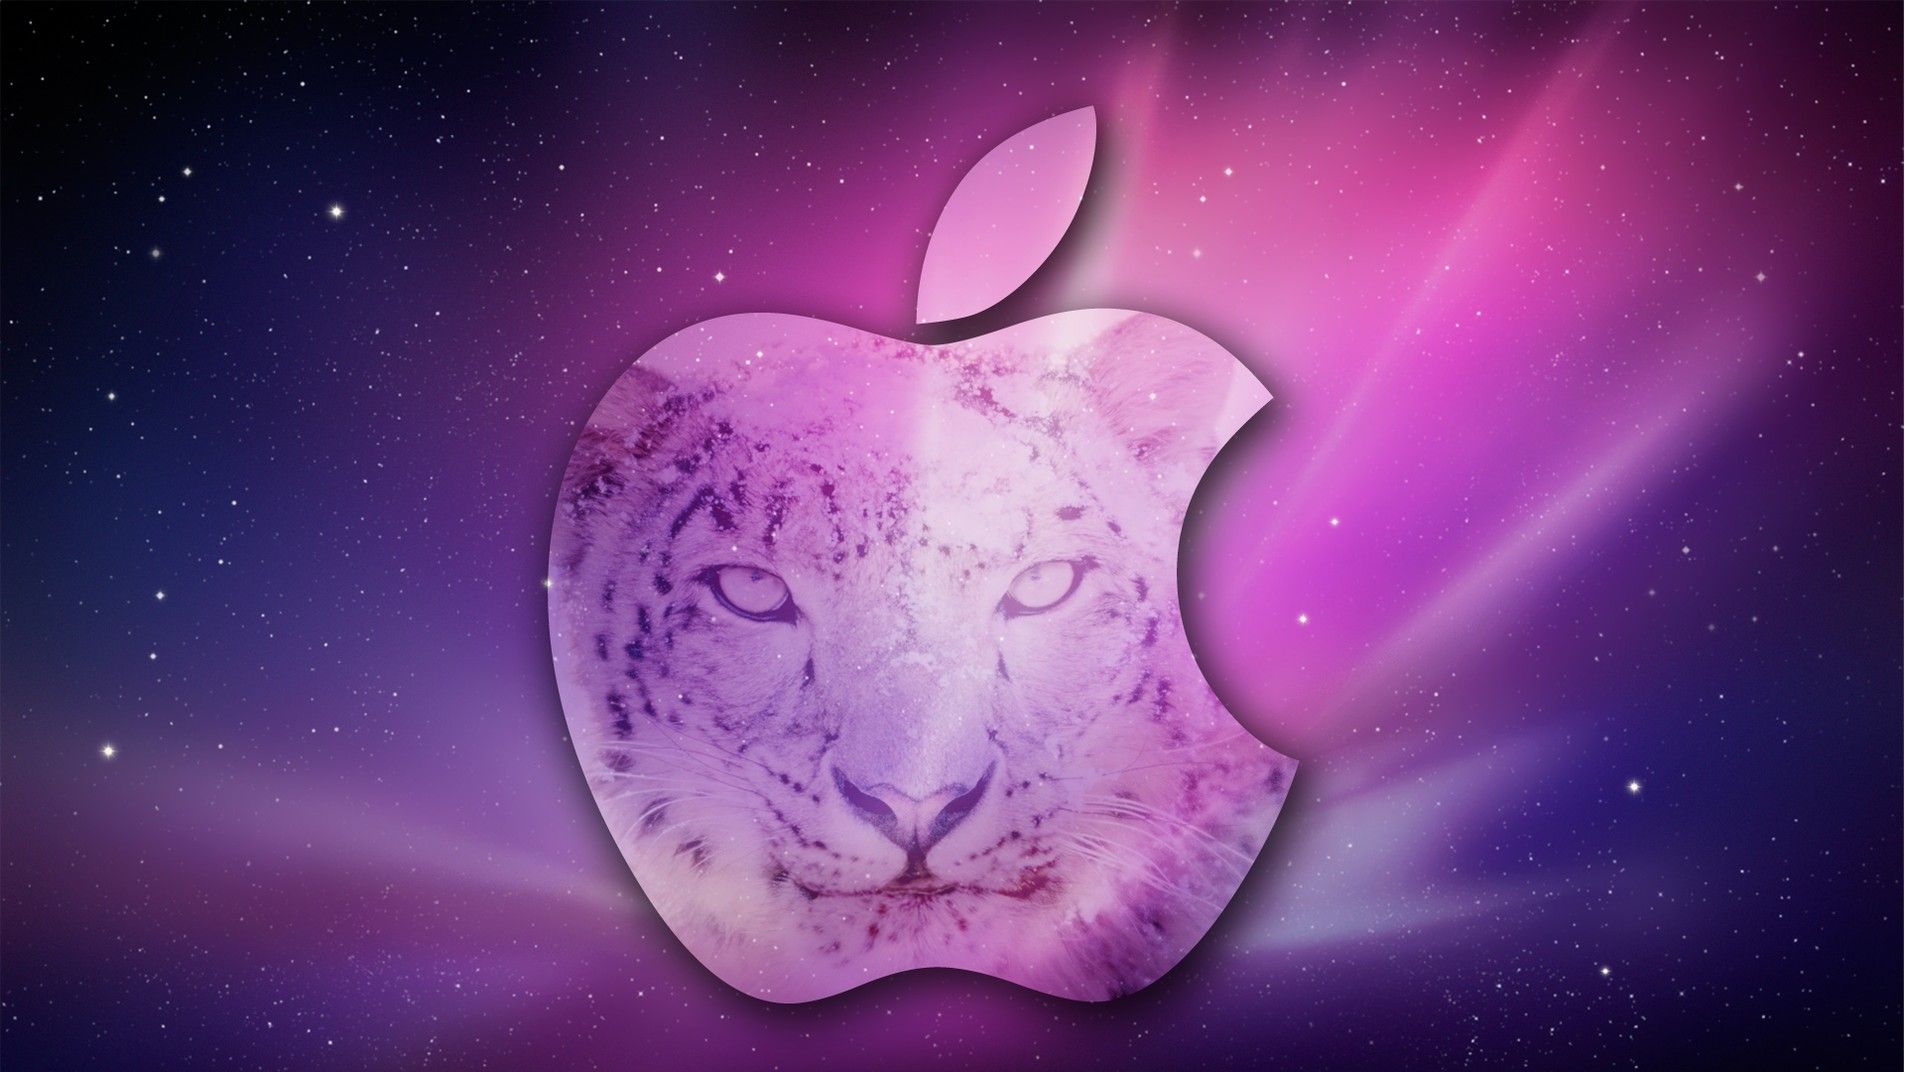 Apple Mac Desktop Backgrounds - Wallpaper Cave